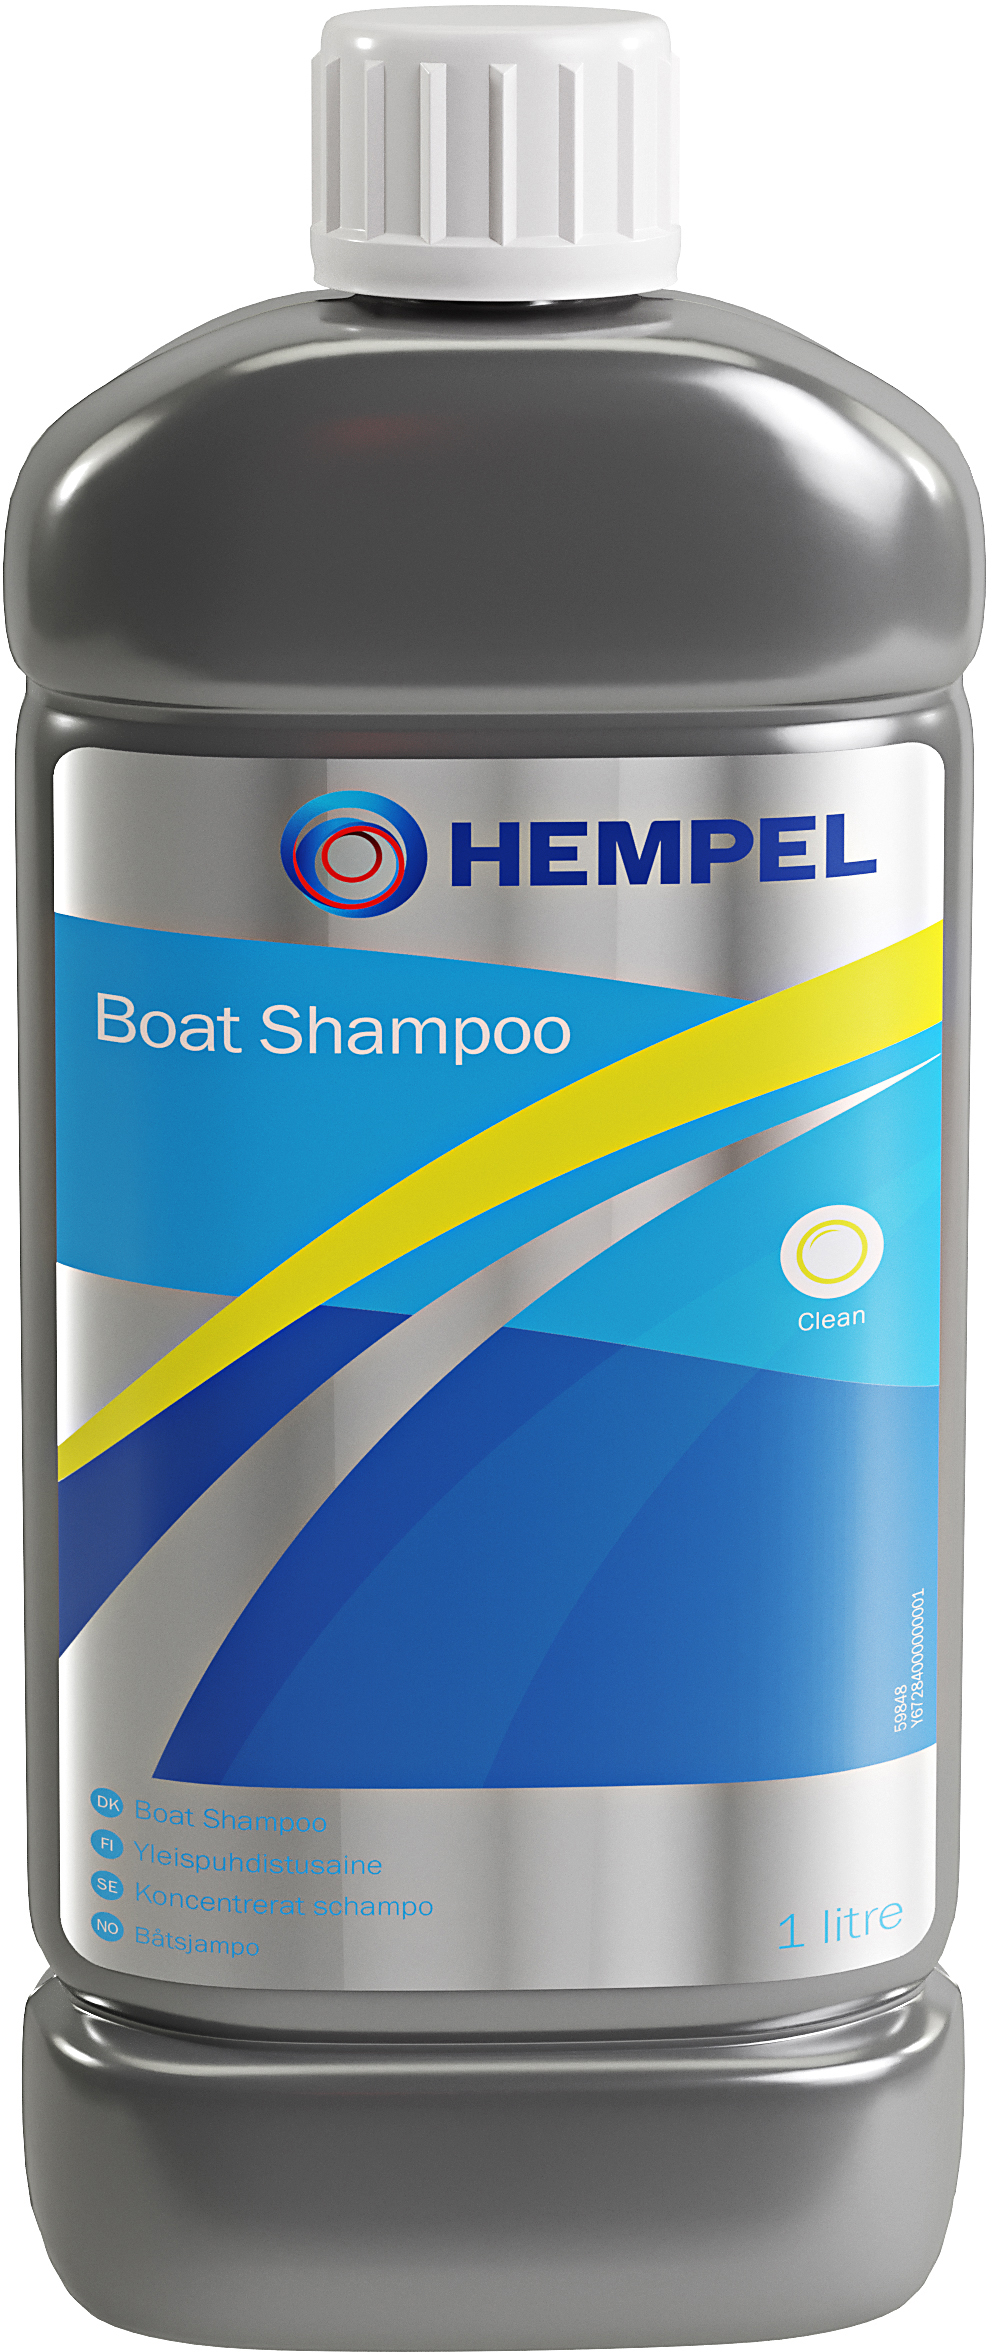 Hempel Boat Shampoo 1 l